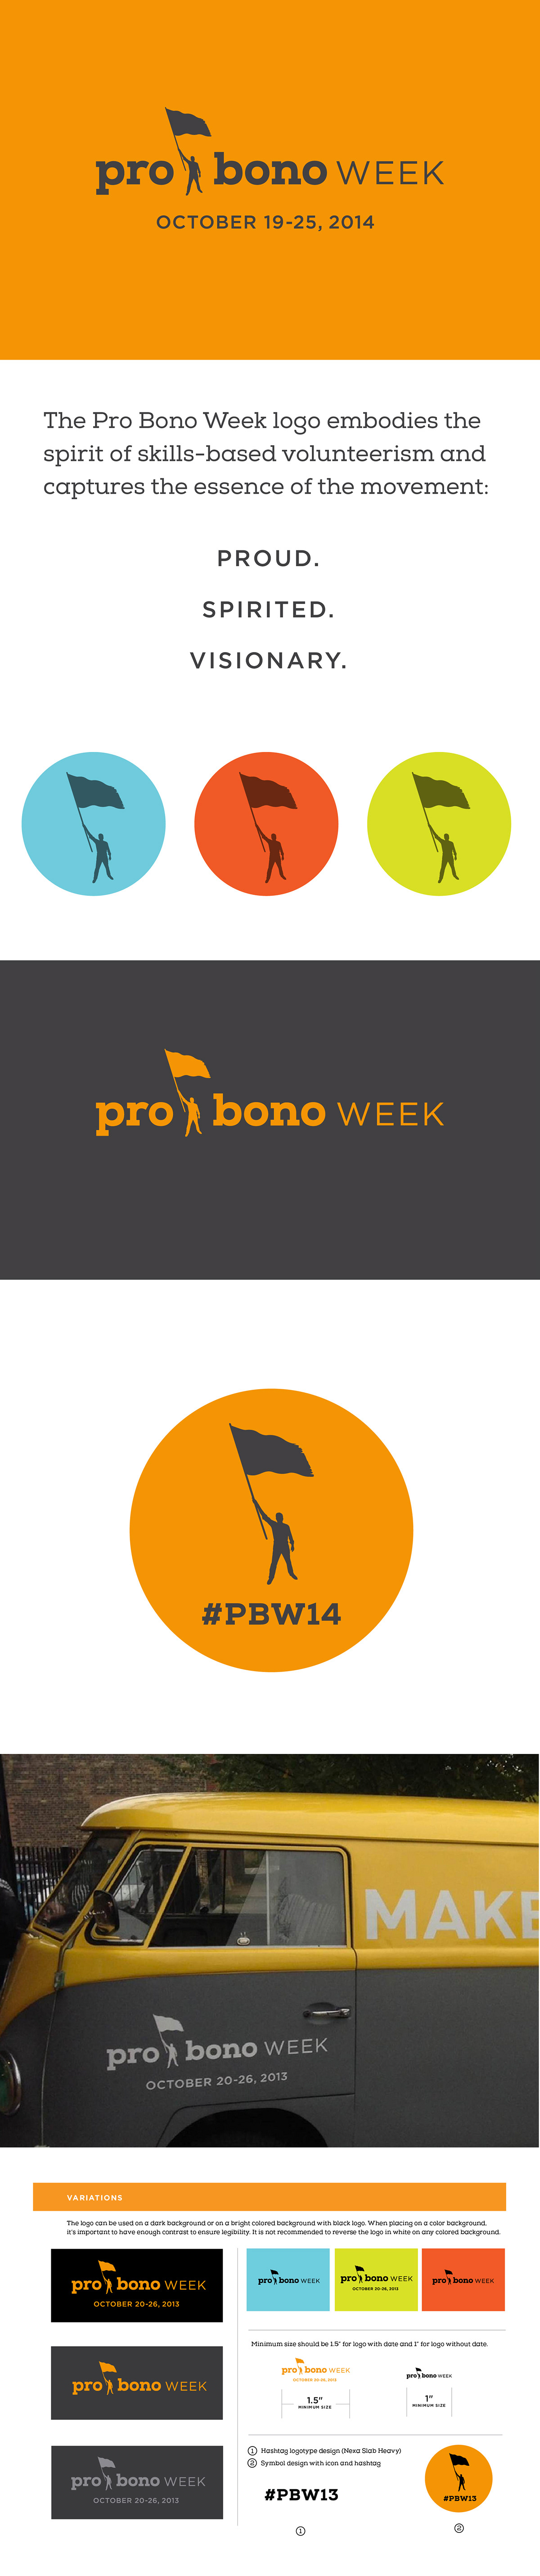 pro bono week brand identity Taproot Foundation riggs partners ryon edwards brand symbol logo pro bono Public good skills-based volunteerism